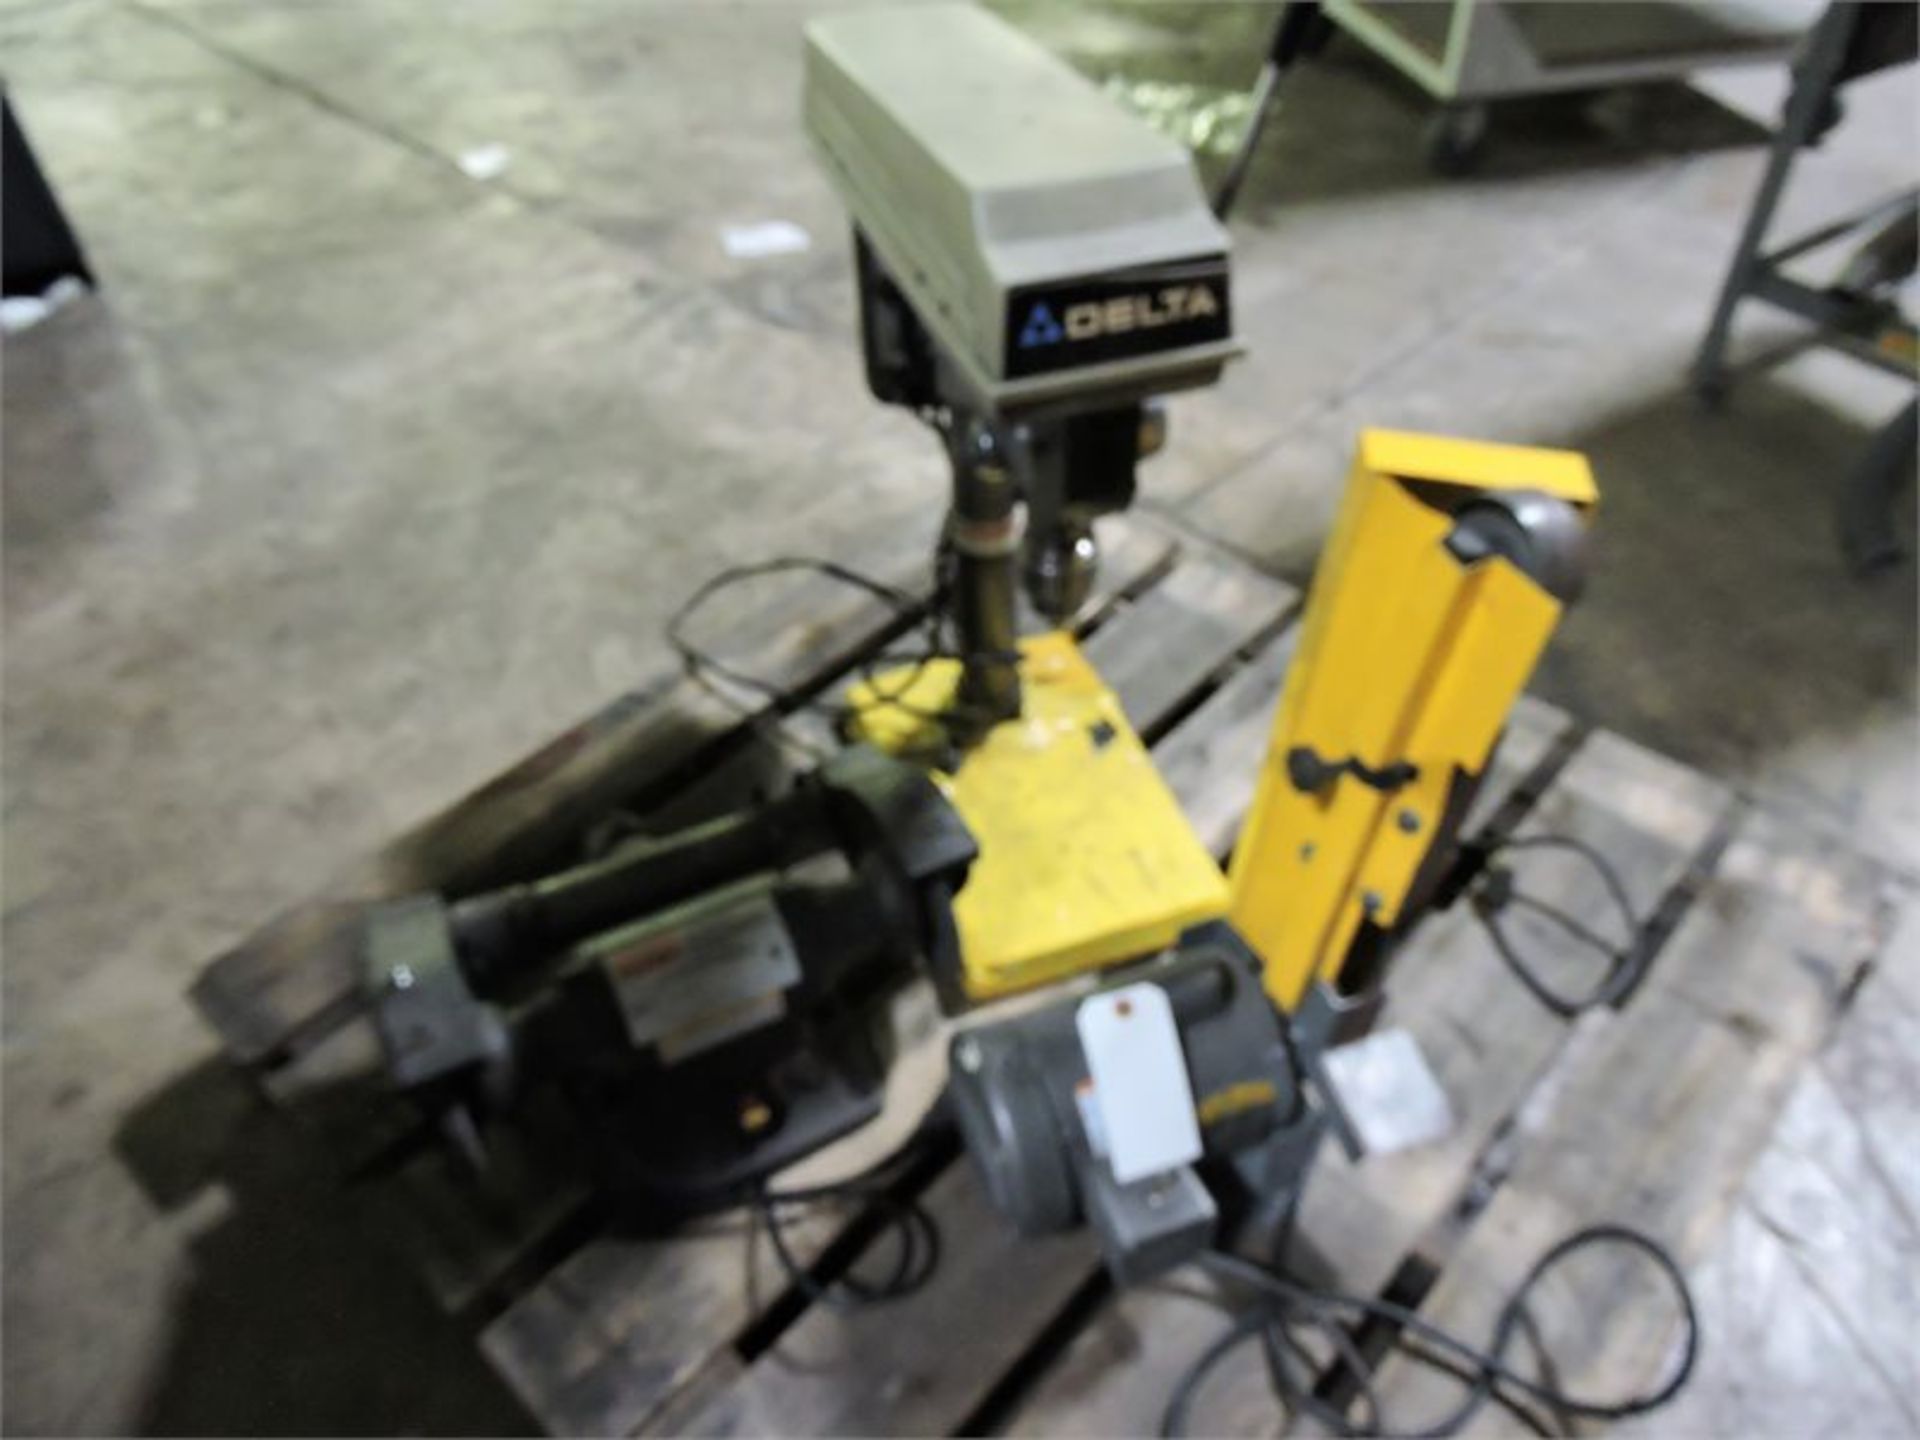 1 Delta drill press on 12” x ½” with motor / kalamazoo sander/ 6” benchgrinder on pallet